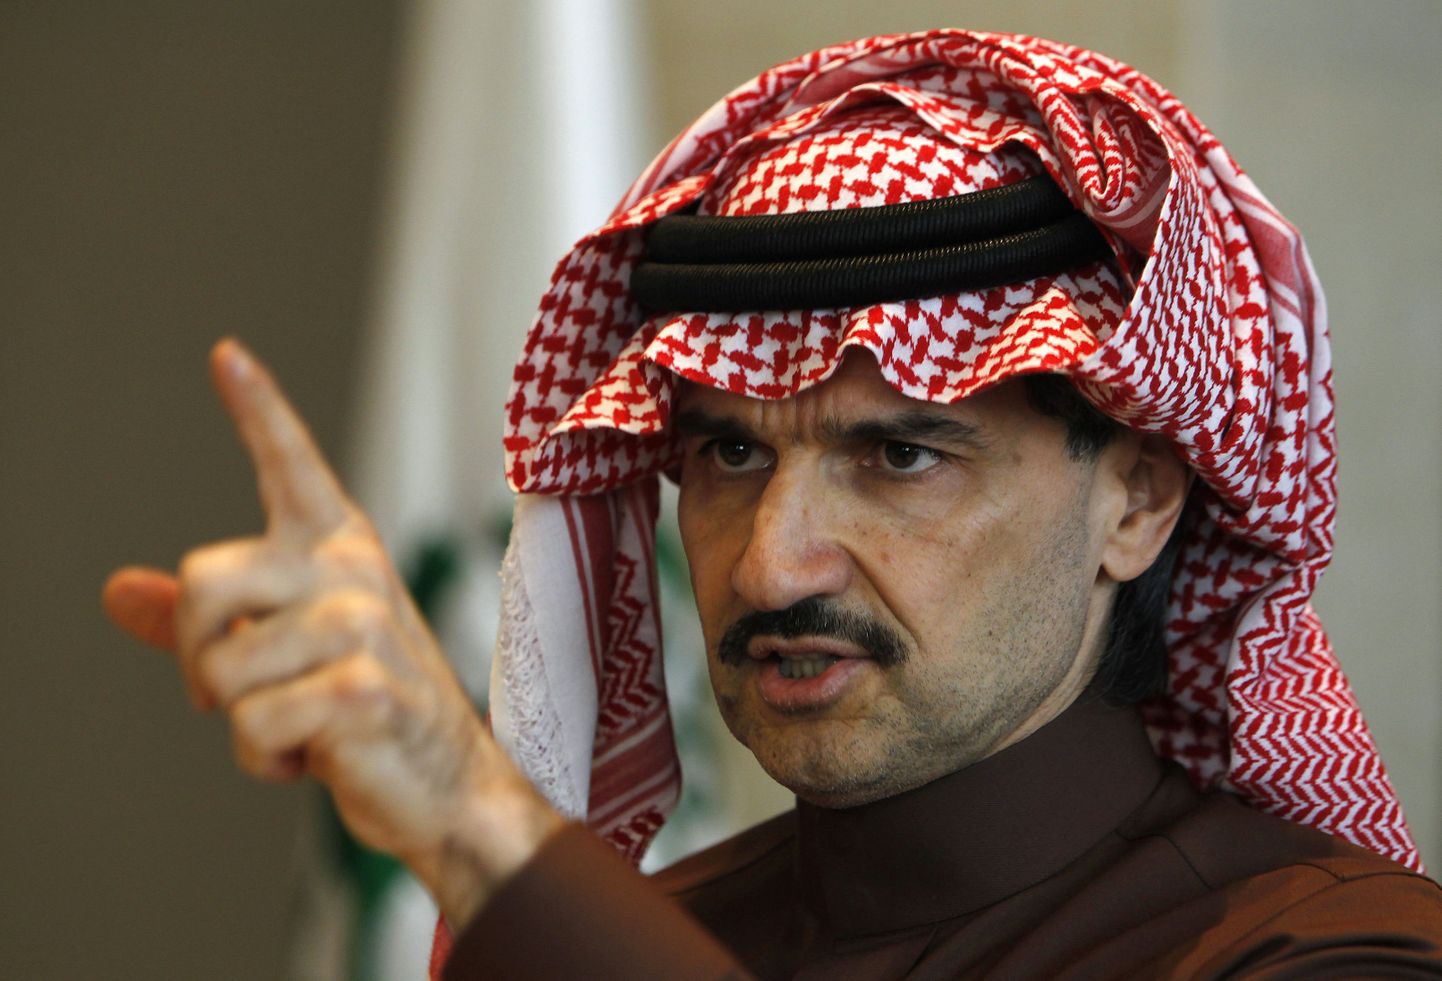 Saudi Araabia prints Alwaleed bin Talal